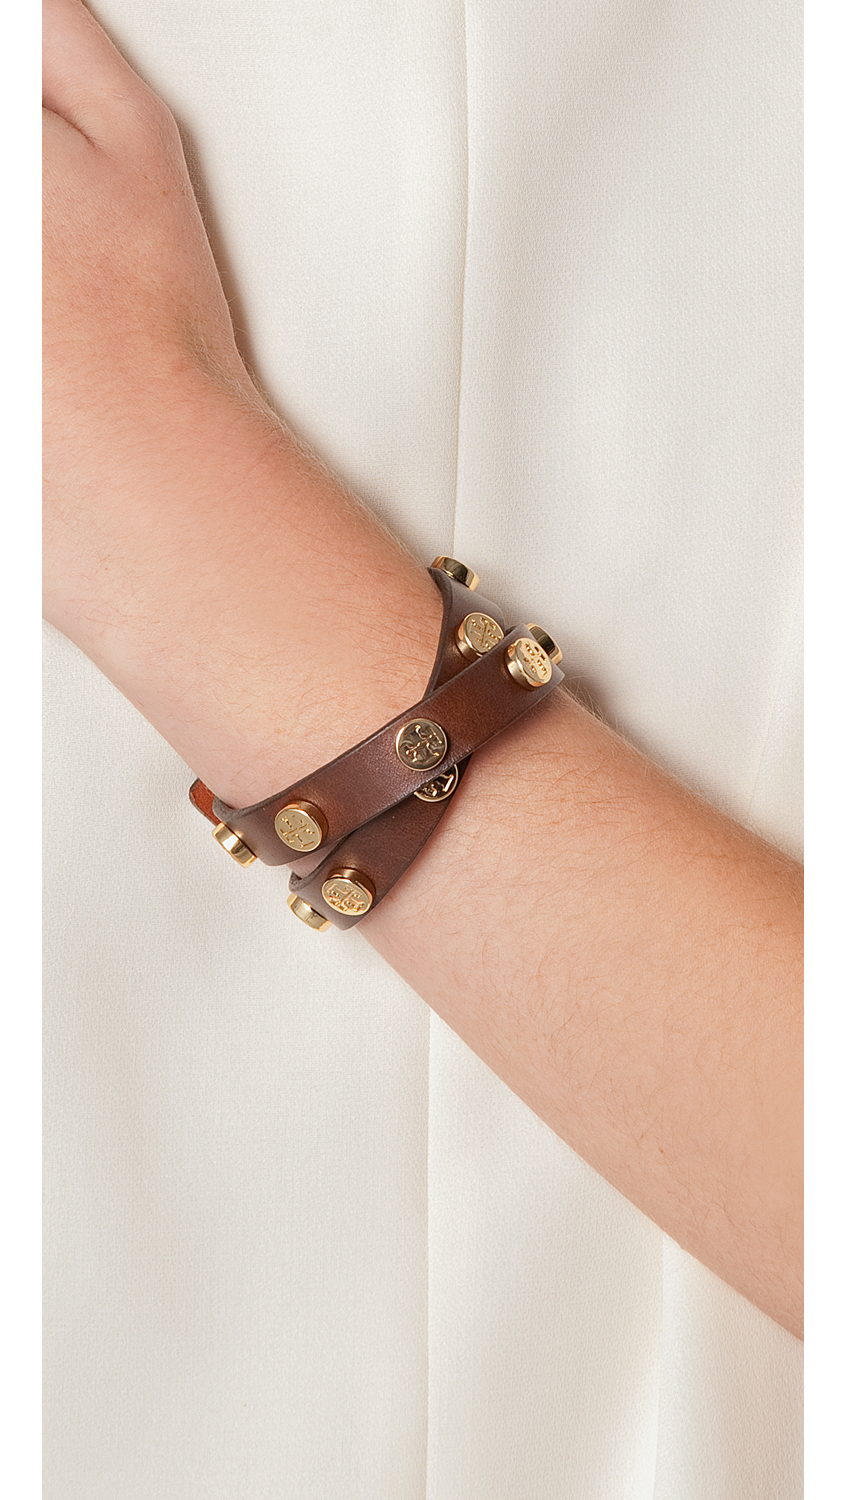 Tory Burch double wrap leather bracelet 